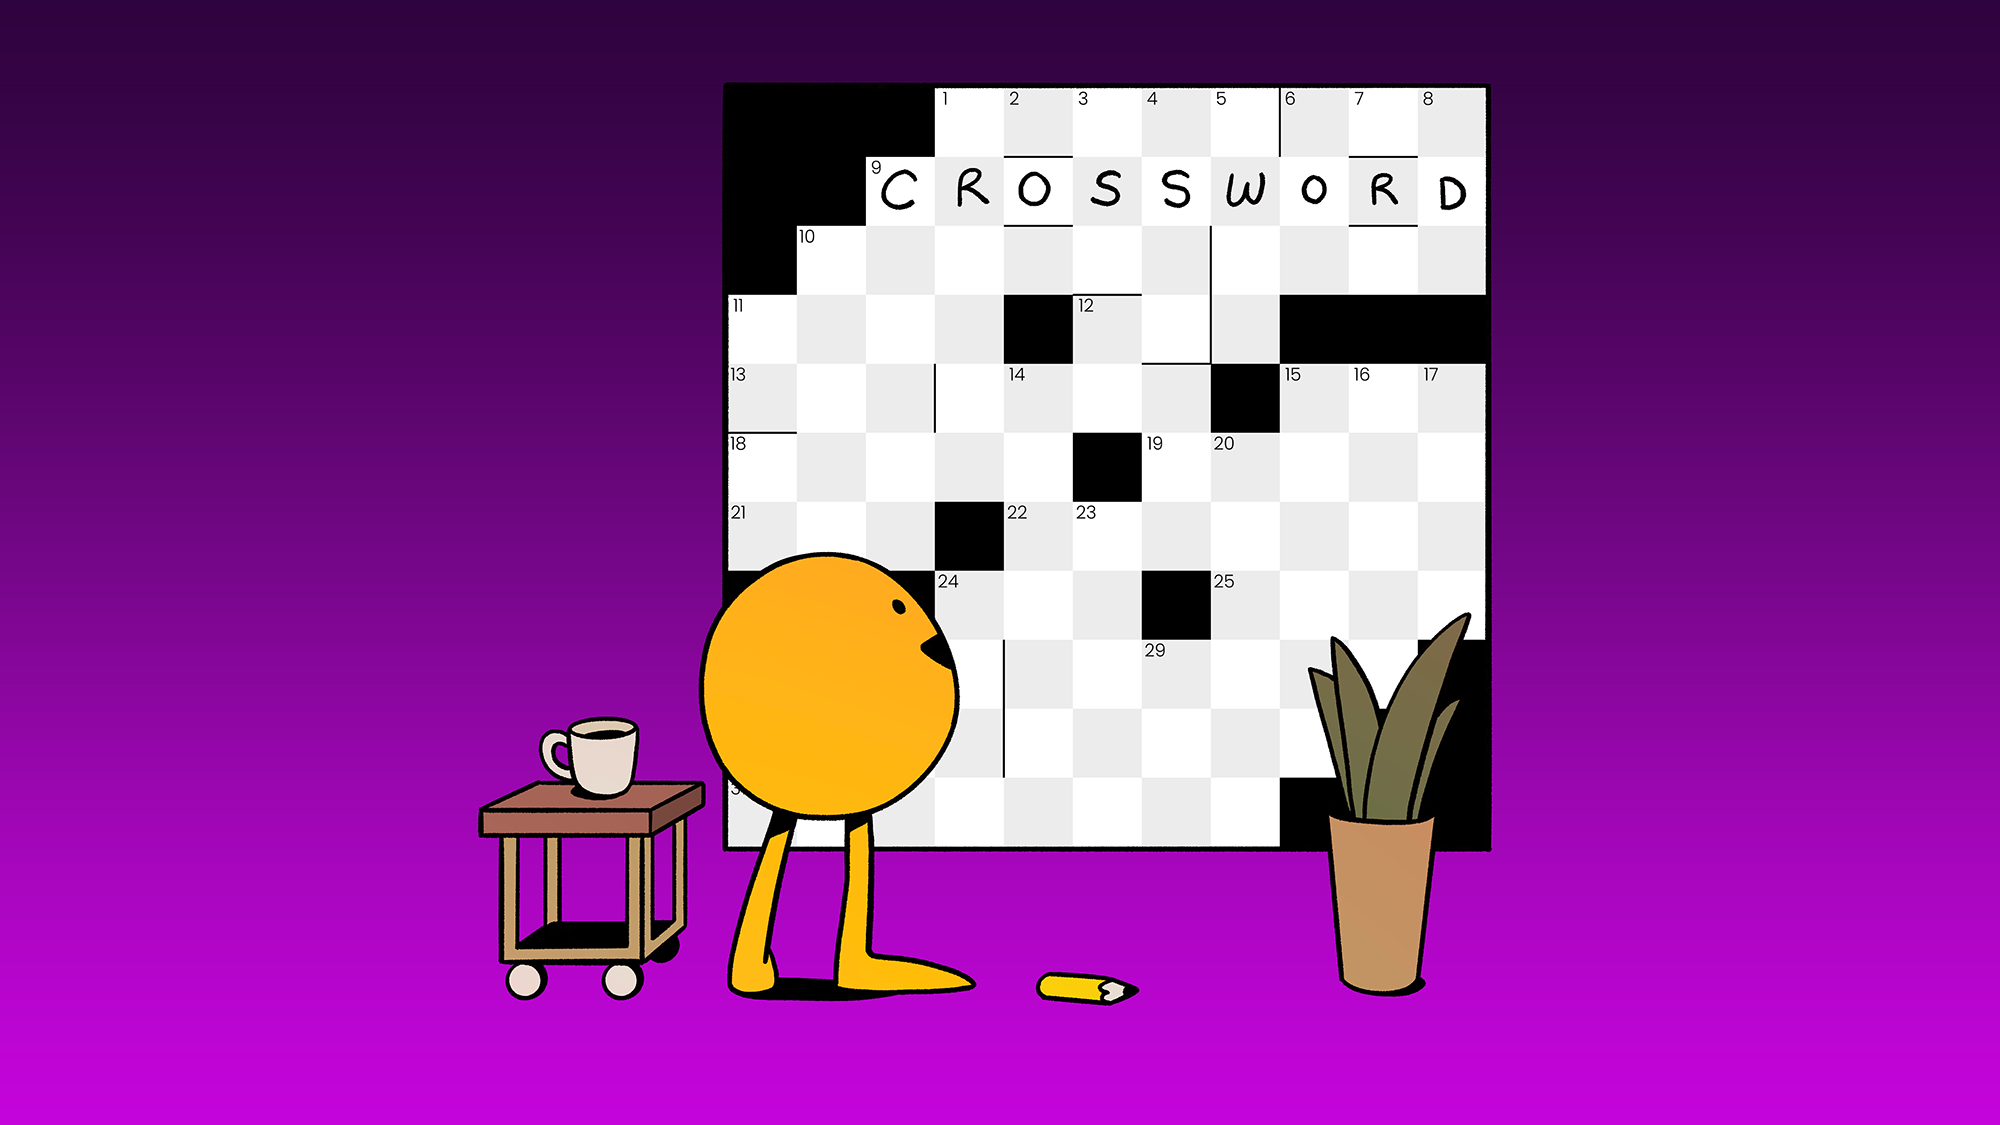 Crossword Puzzle, Advice/Comics for Jan. 8, 2021